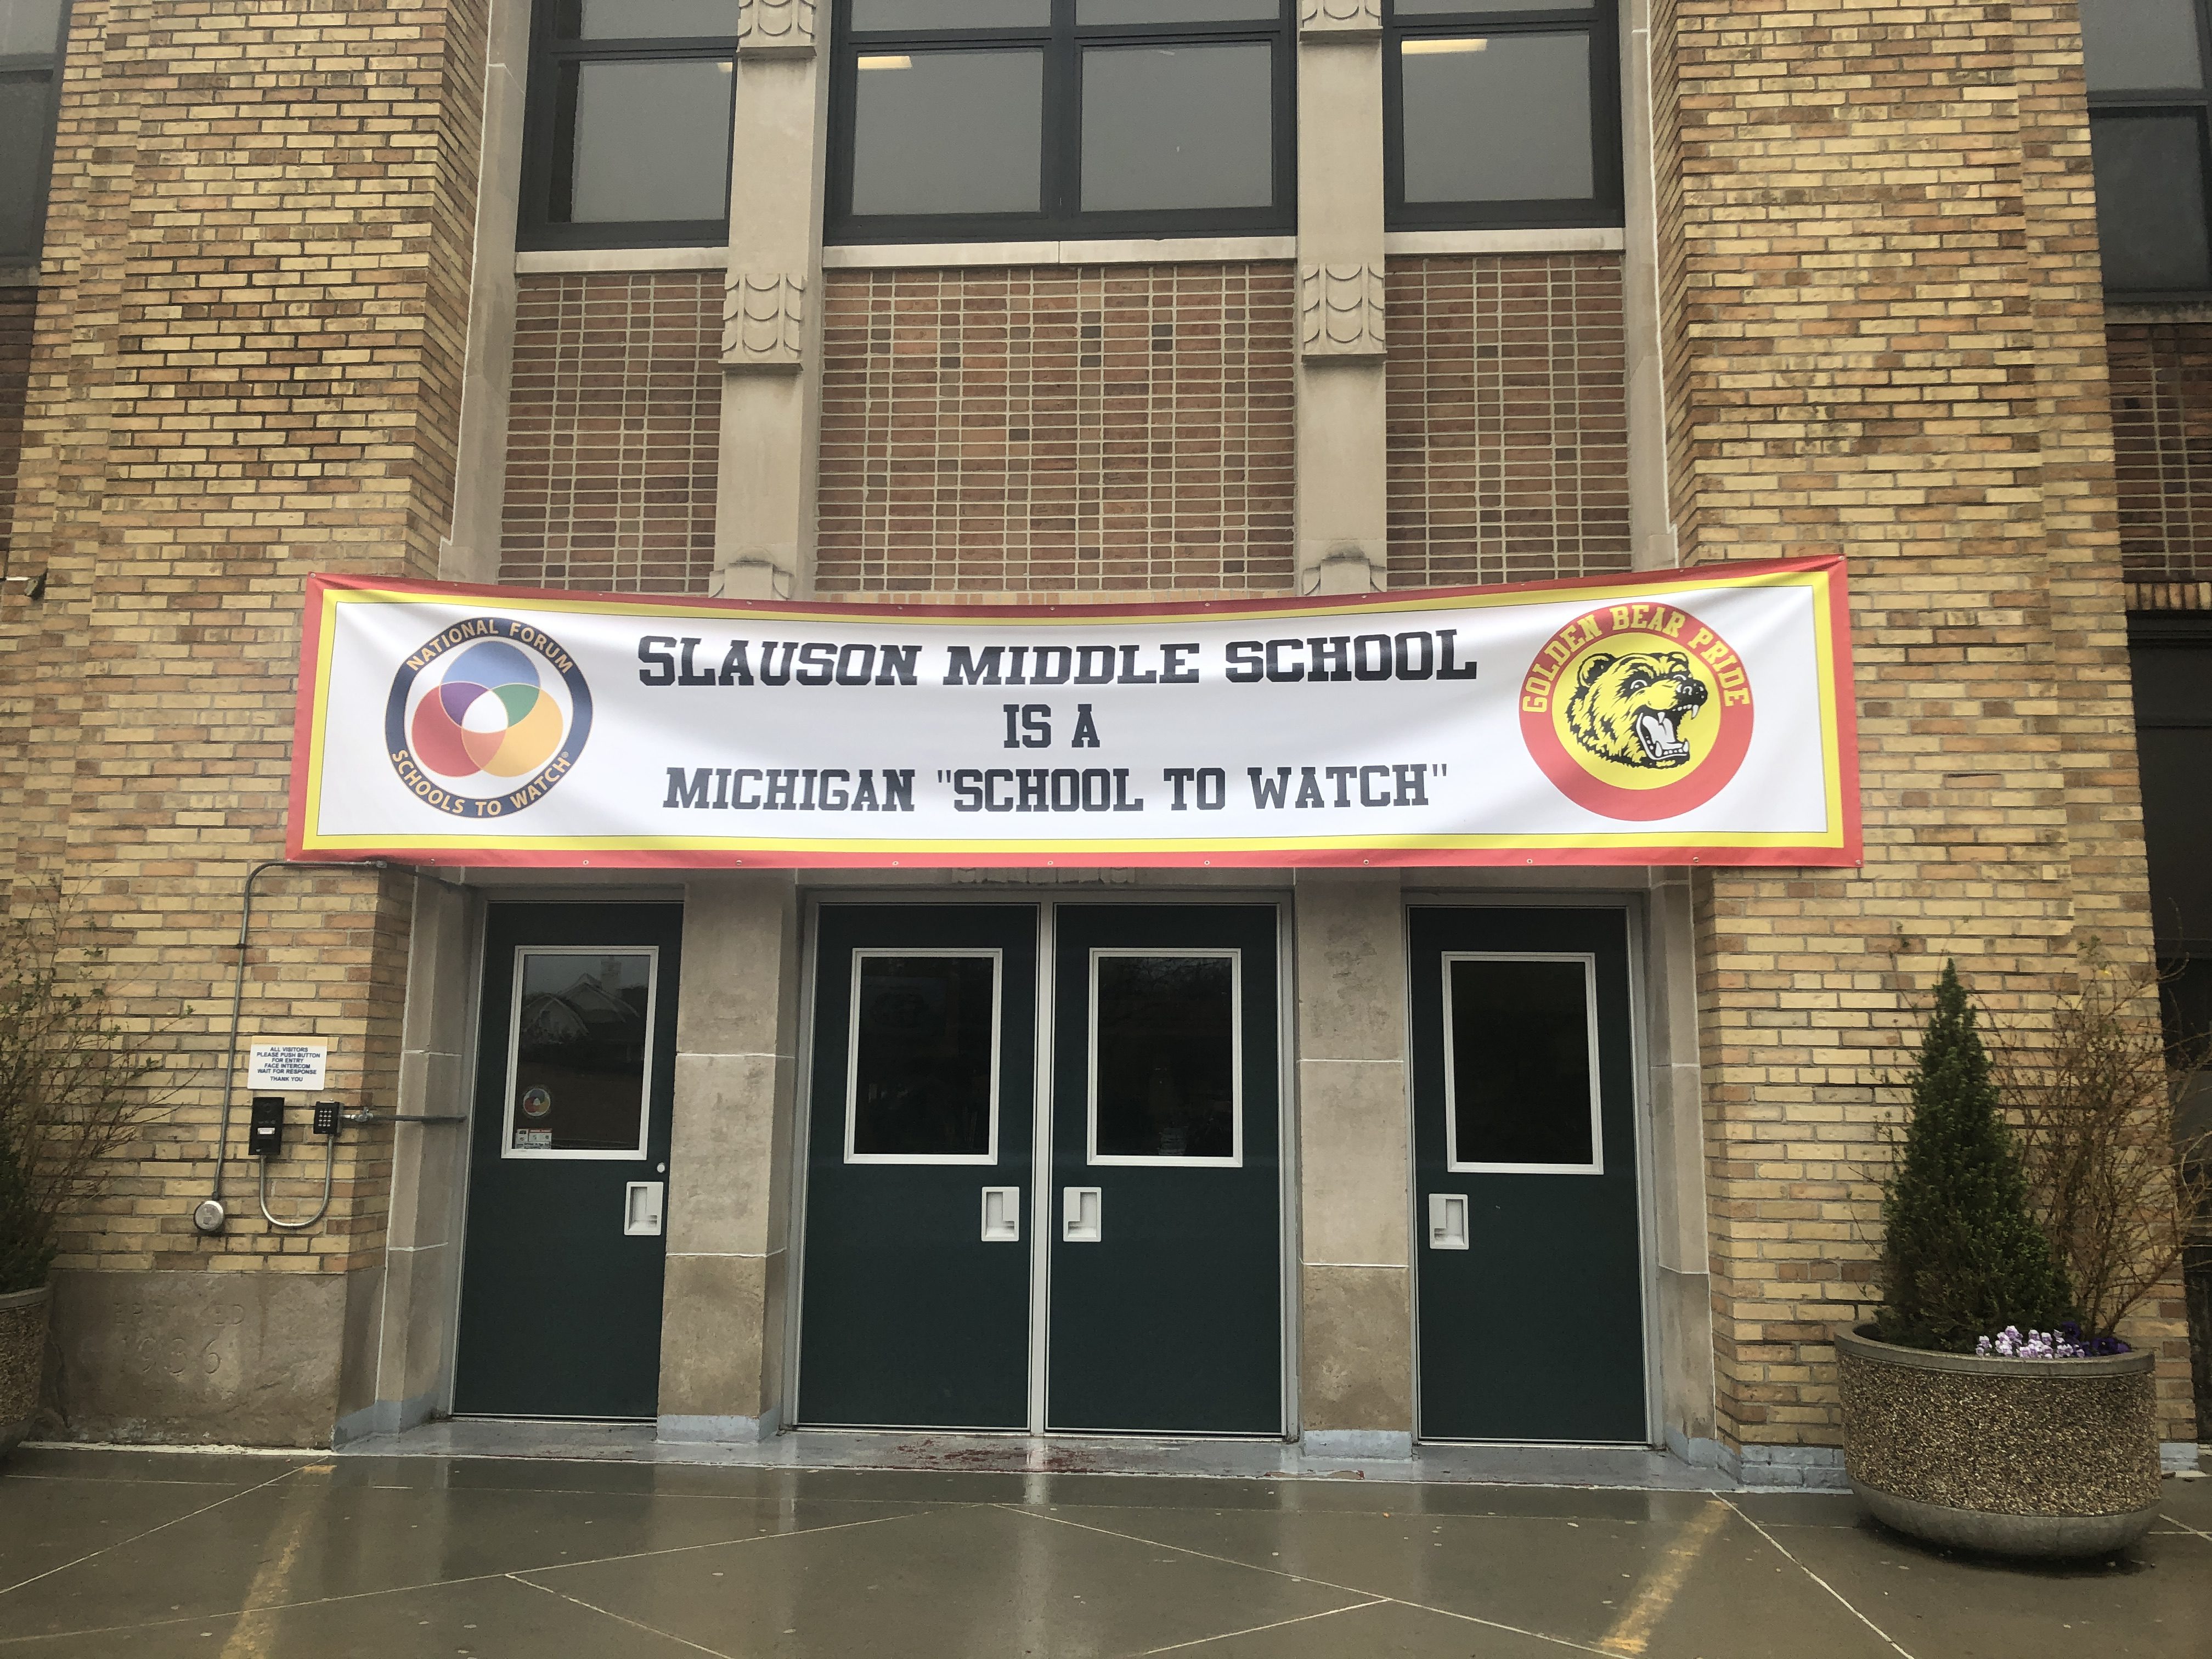 Slauson Middle School is named a â€˜Michigan School to Watch